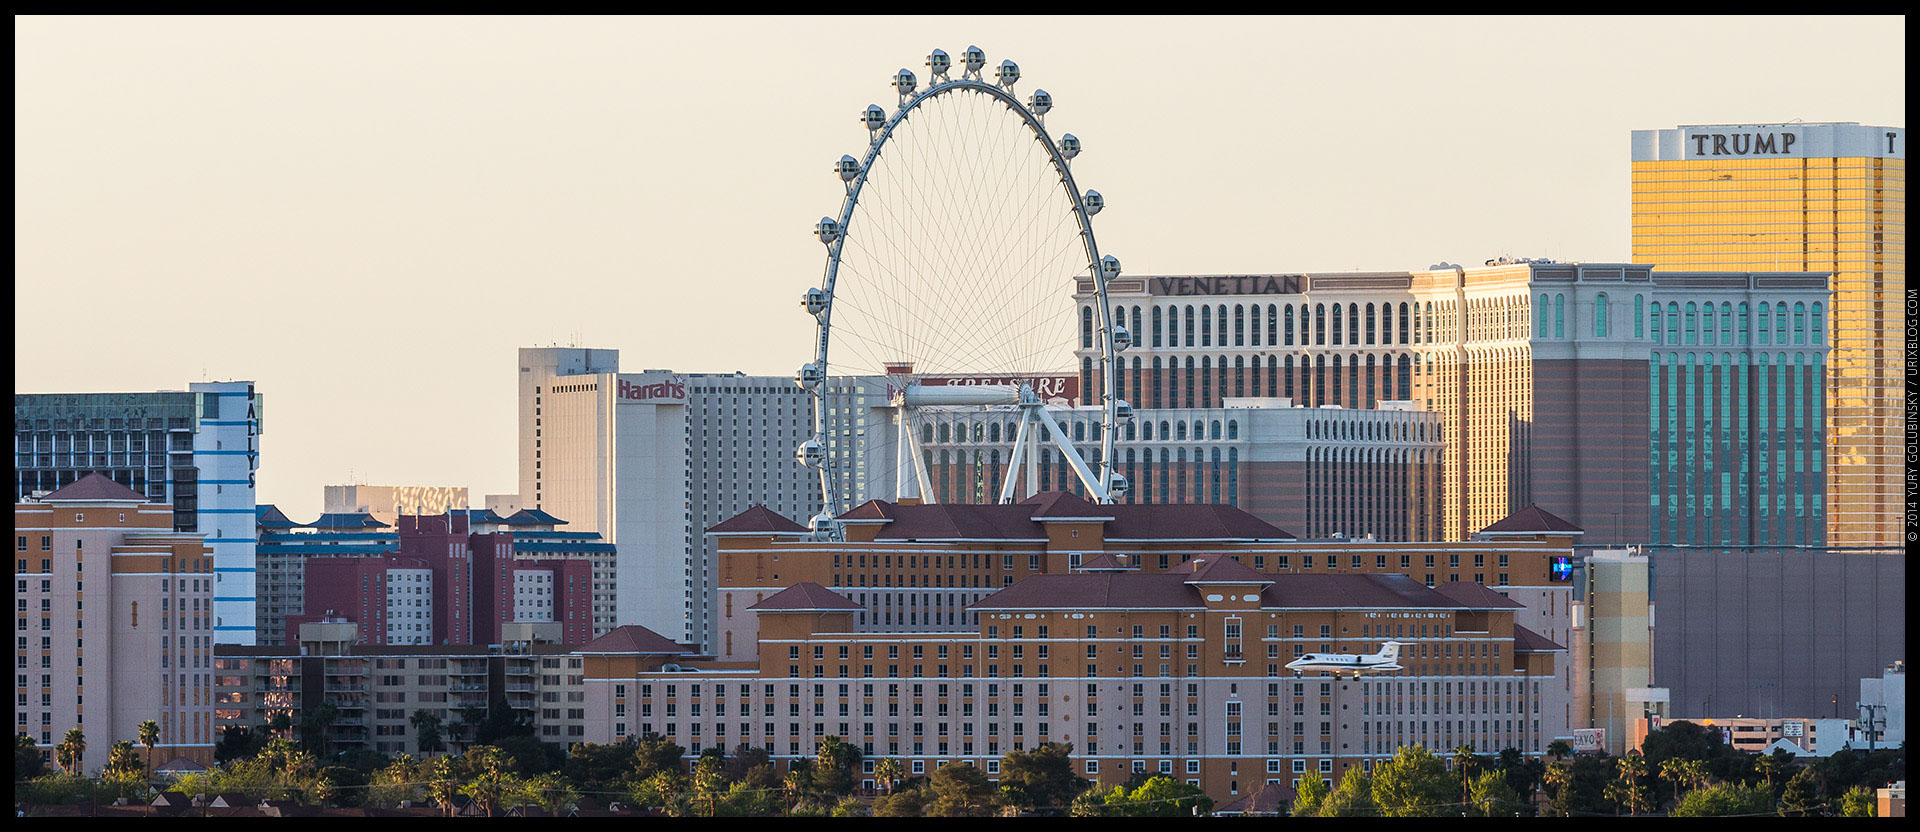 High Roller, observation wheel, Venetian, 2014, LAS, Las Vegas McCarran International airport, strip, LV, Clark County, USA, Nevada, panorama, horizon, city